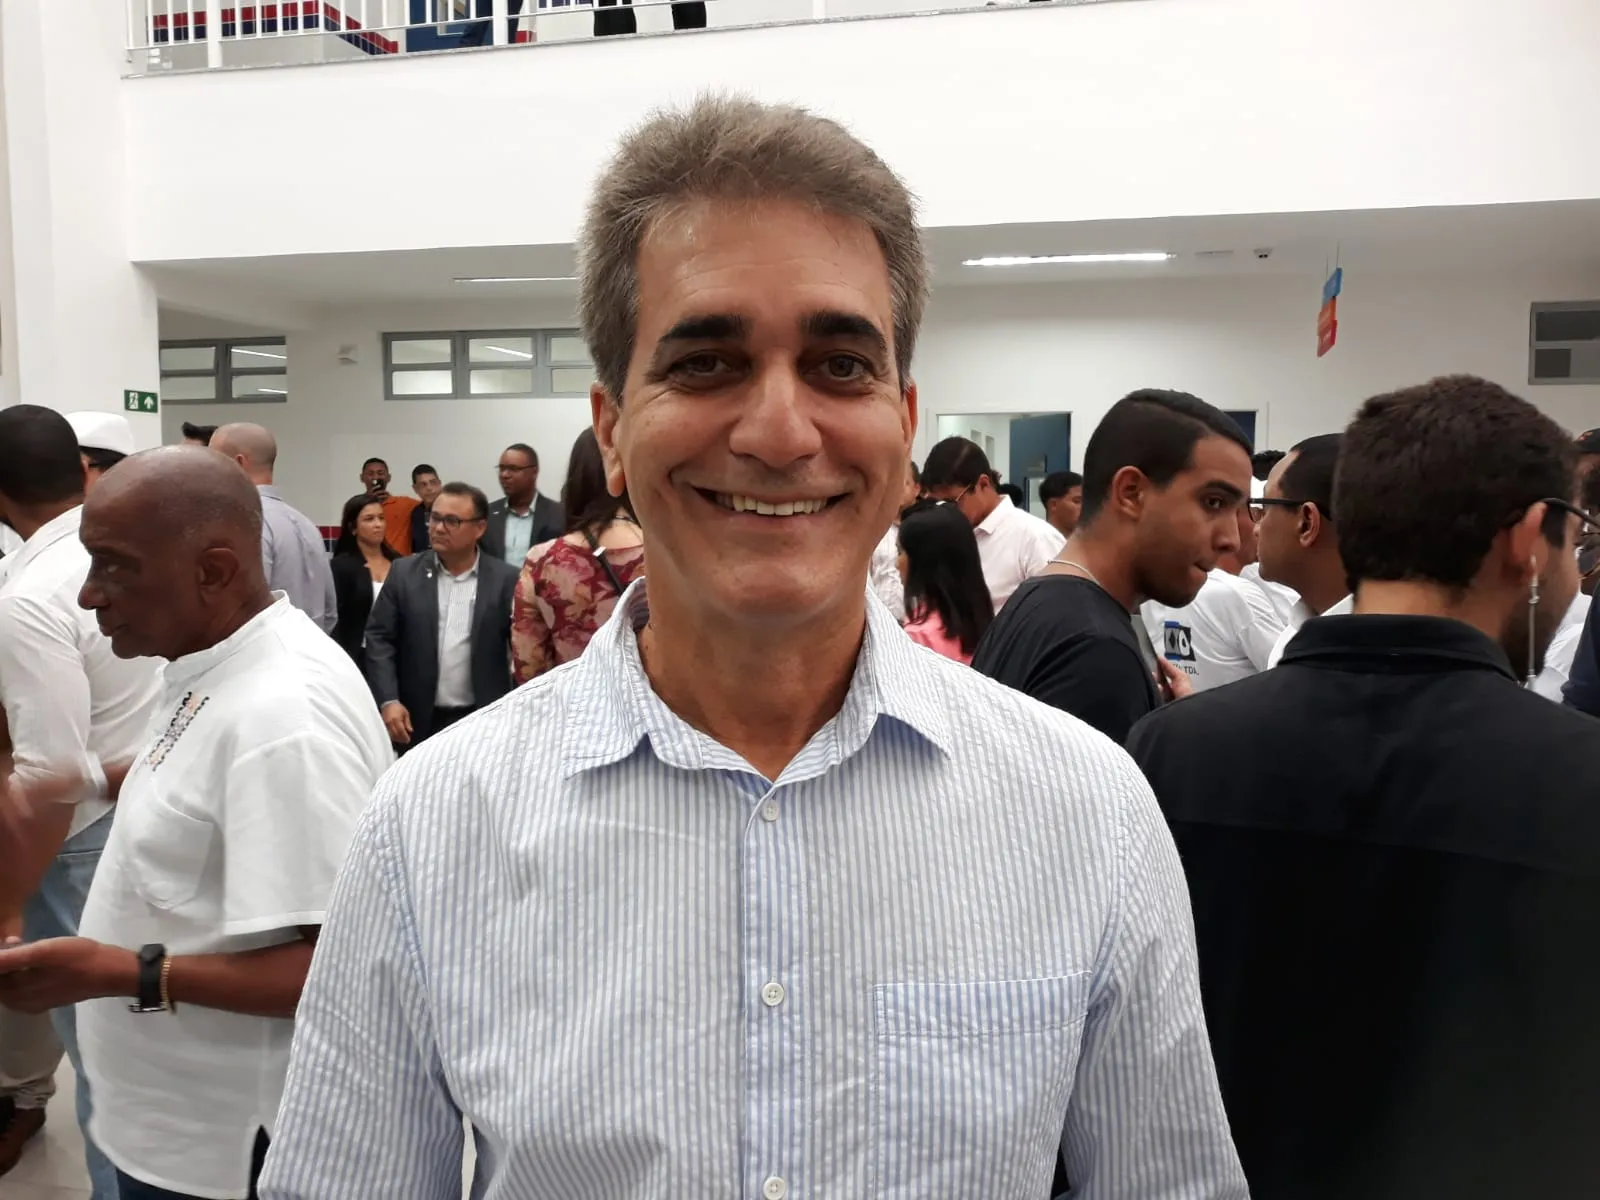 Segundo Robinson, possibilidade de diálogo entre PT e tucanos se dá pelo novo momento que o PSDB vive